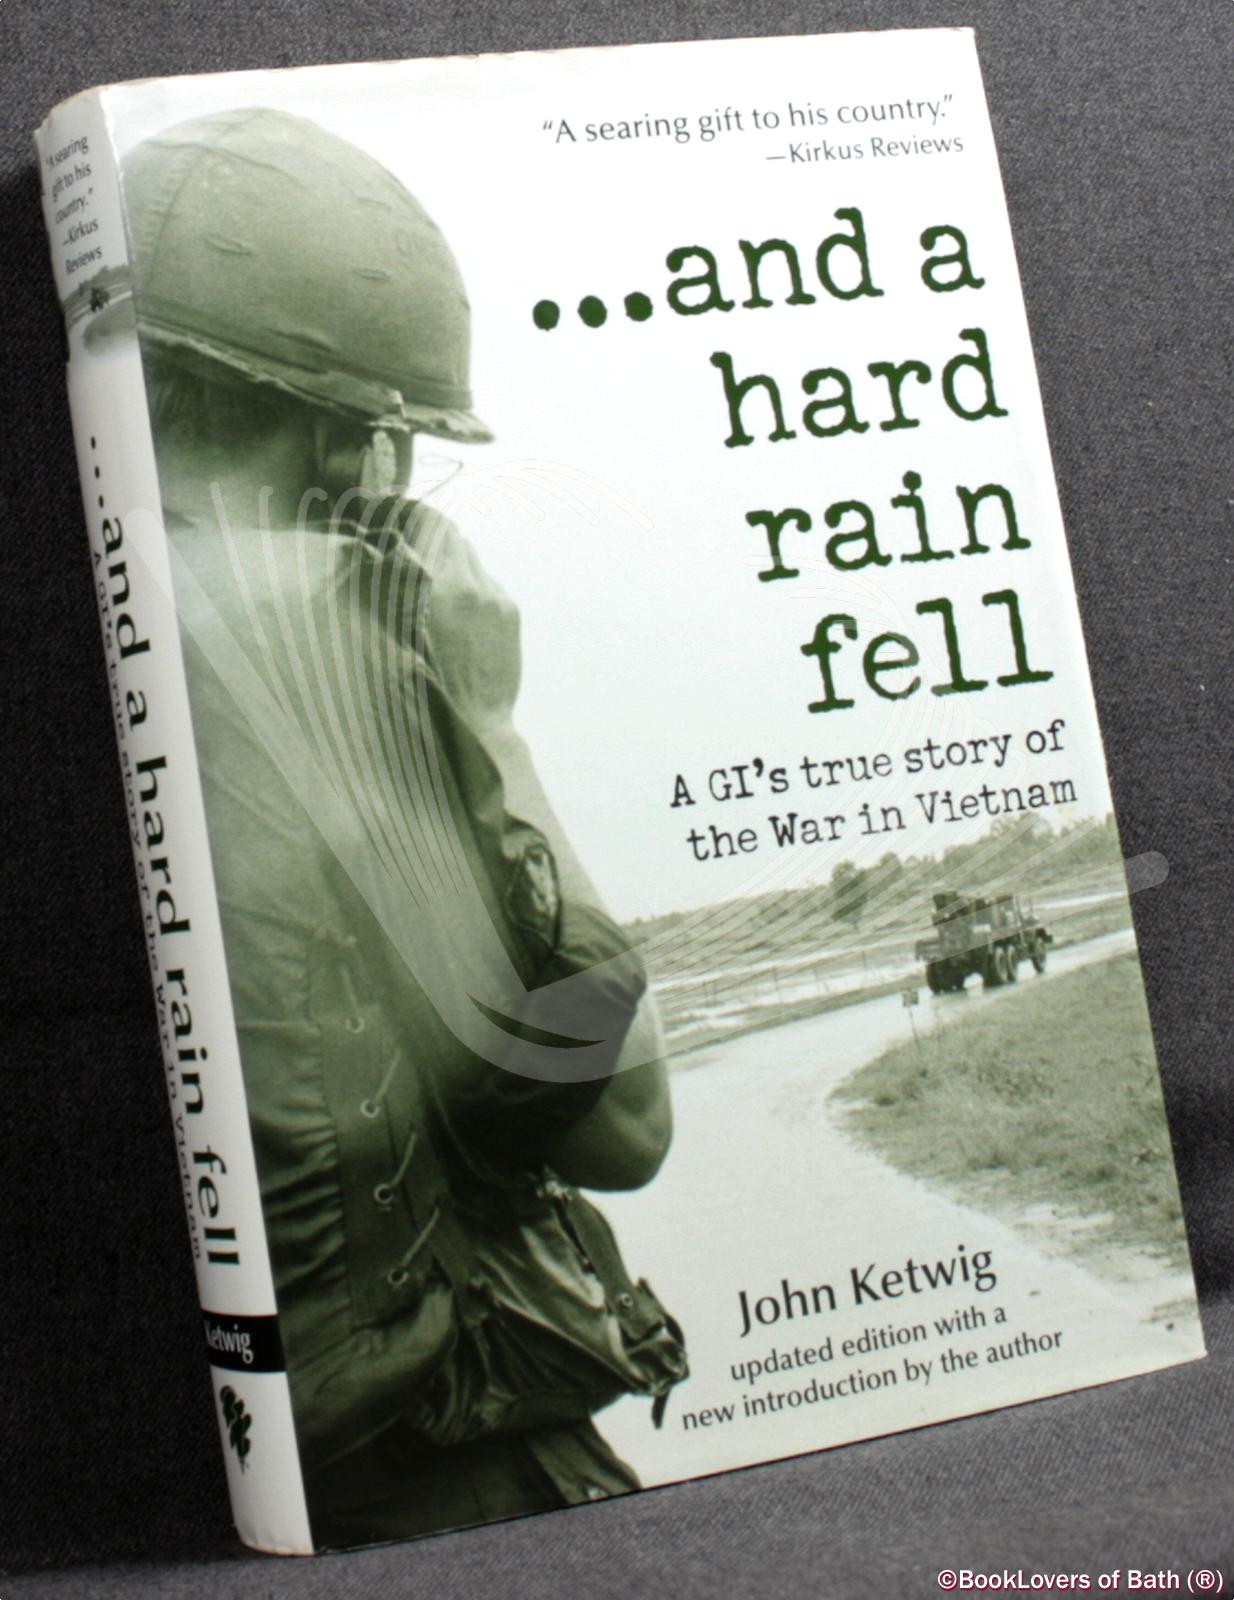 And a Hard Rain Fell: A GI's True Story of the War in Vietnam - John Ketwig